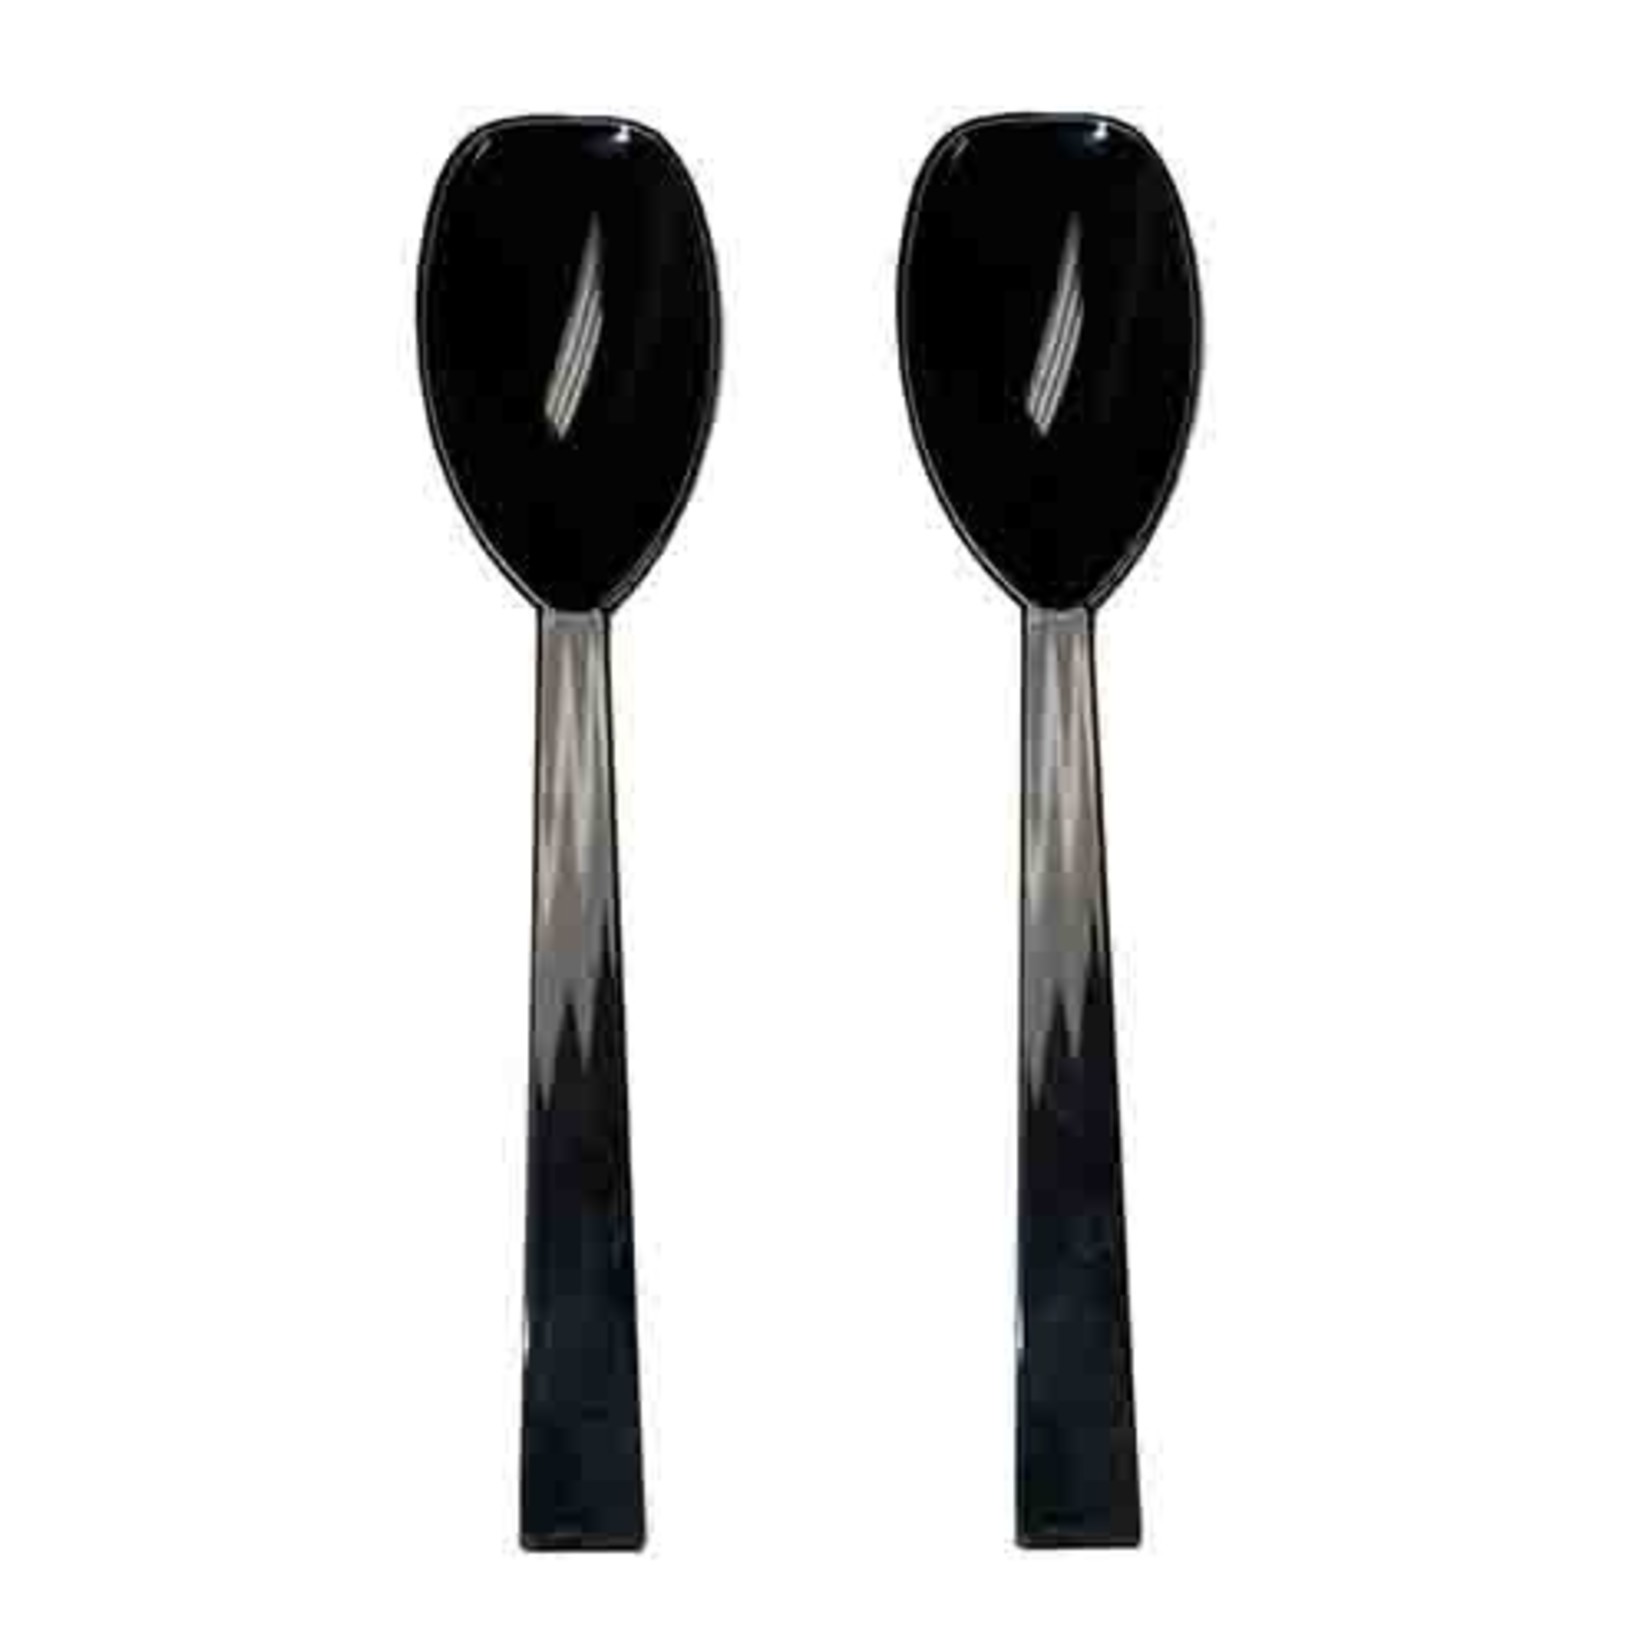 northwest 9" Black Plastic Serving Spoons - 12ct.